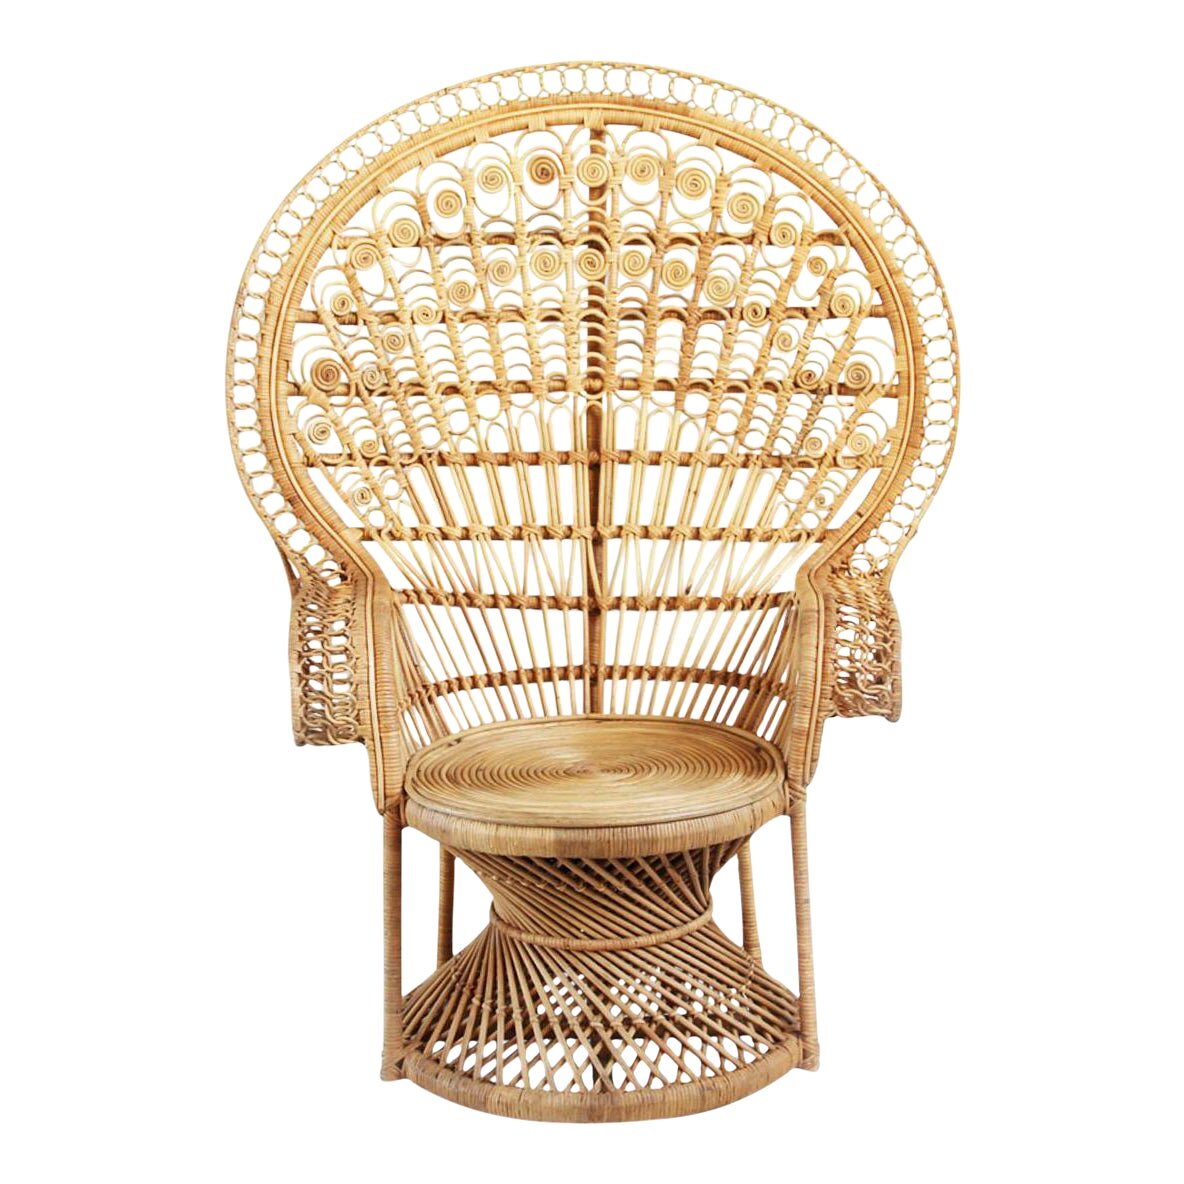 Peacock Chair $175